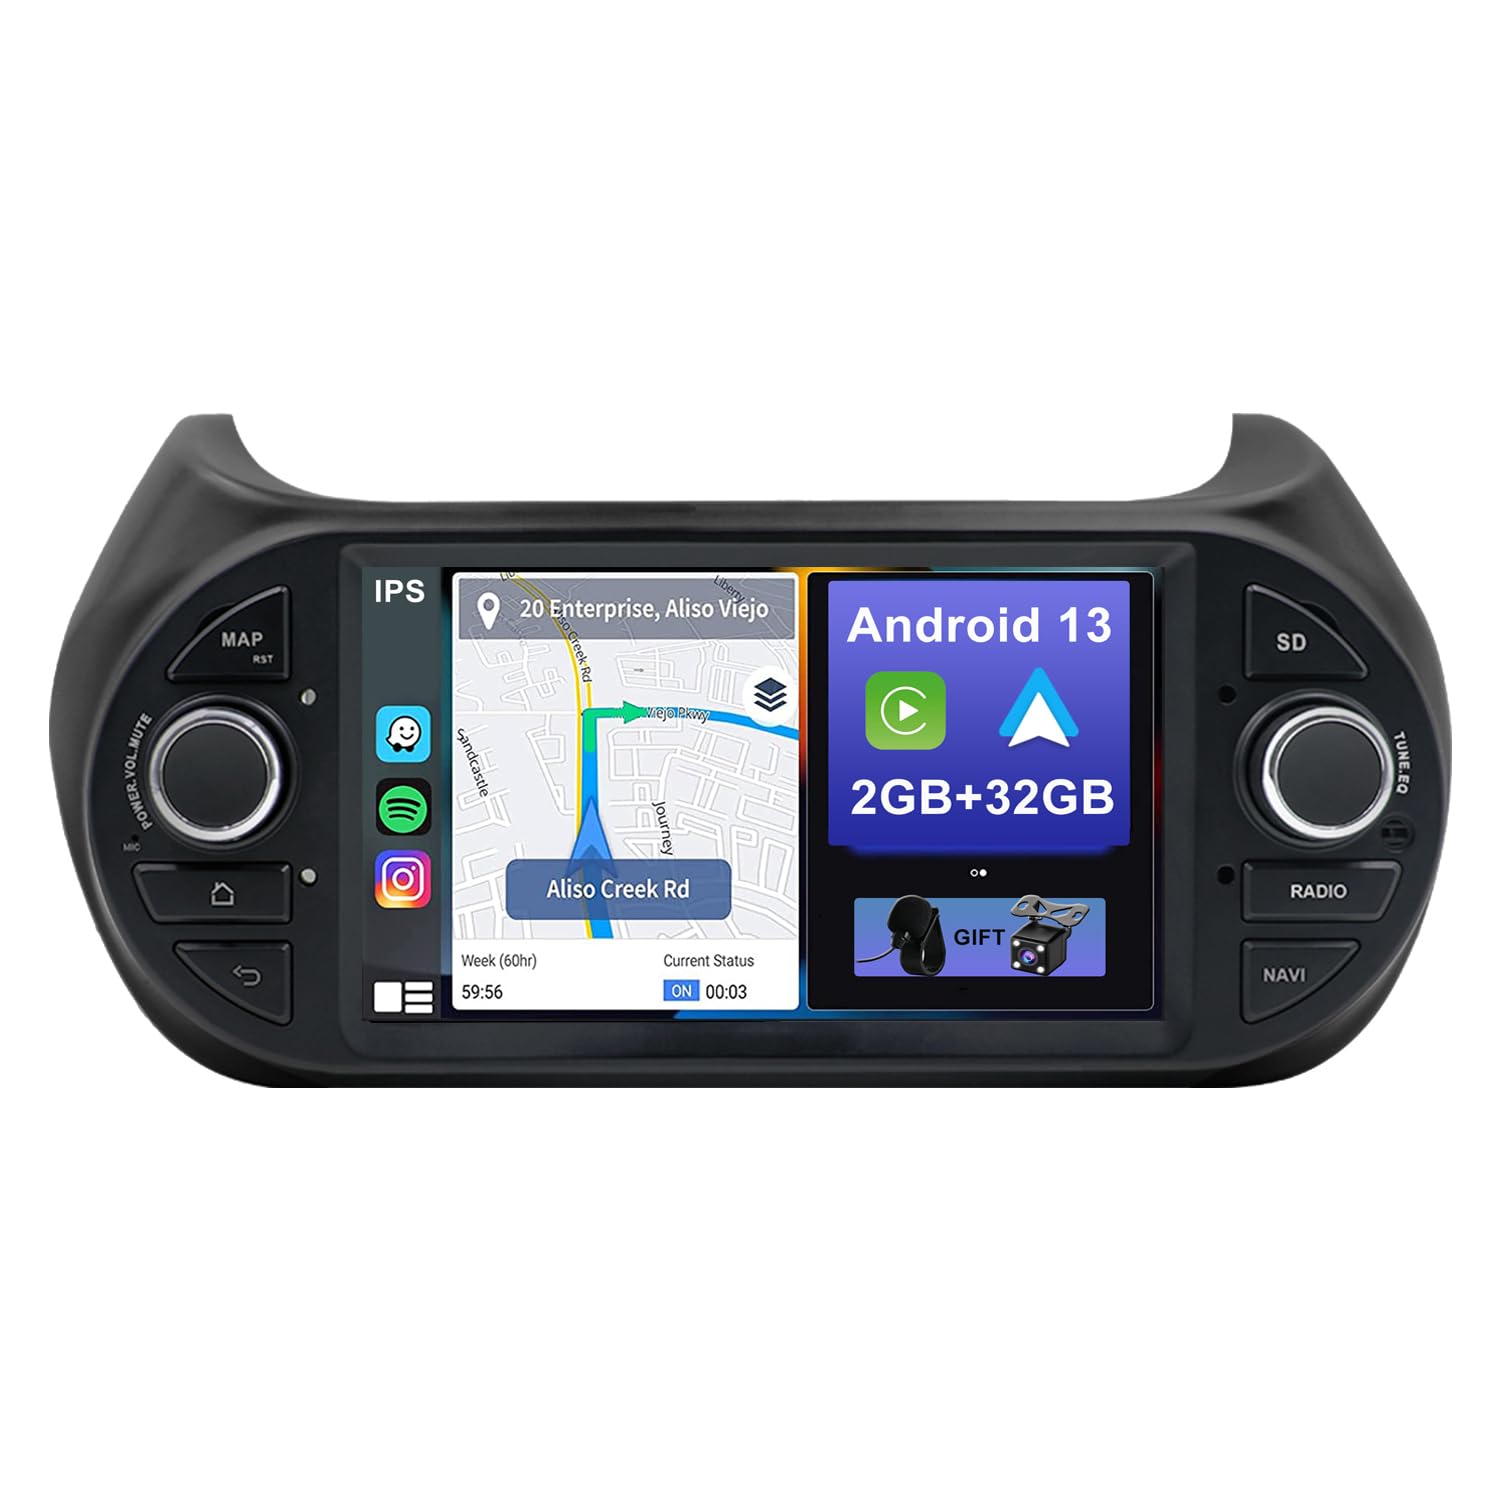 YUNTX Android 13 Autoradio für FIAT Fiorino/Qubo/Citroen Nemo/Peugeot Bipper Radio -IPS 7 Zoll GPS mit navi Bluetooth - Unterstützung DAB/USB/CarPlay/WiFi/4G/MirrorLink (mit rückfahrkamera)